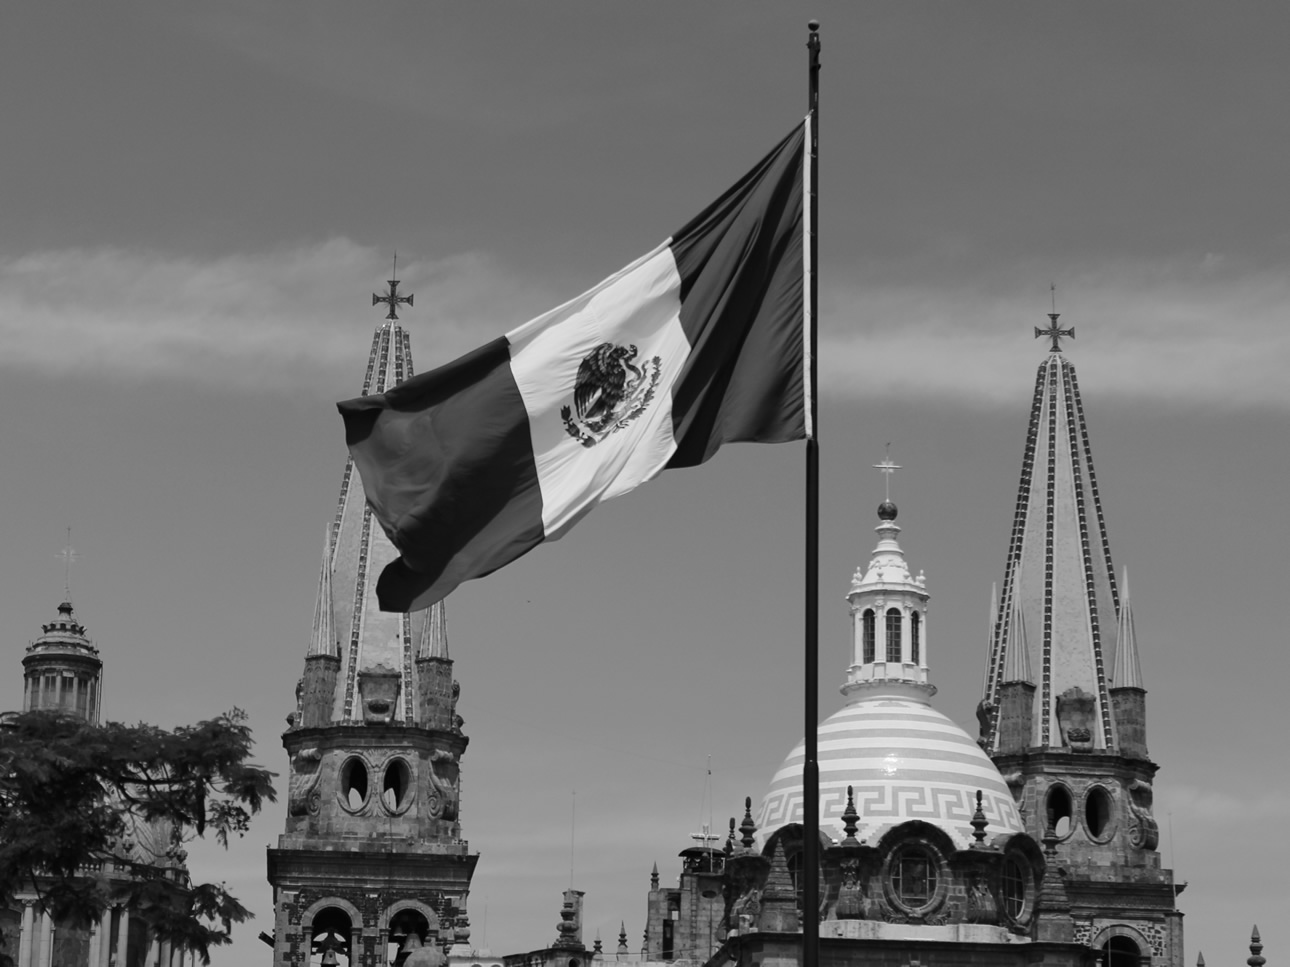 Viesca, E. (2014). [Bandera mexicana, Plaza Liberación, Guadalajara, Jalisco]. Recuperado a partir de http://archive.org/details/gdl2014